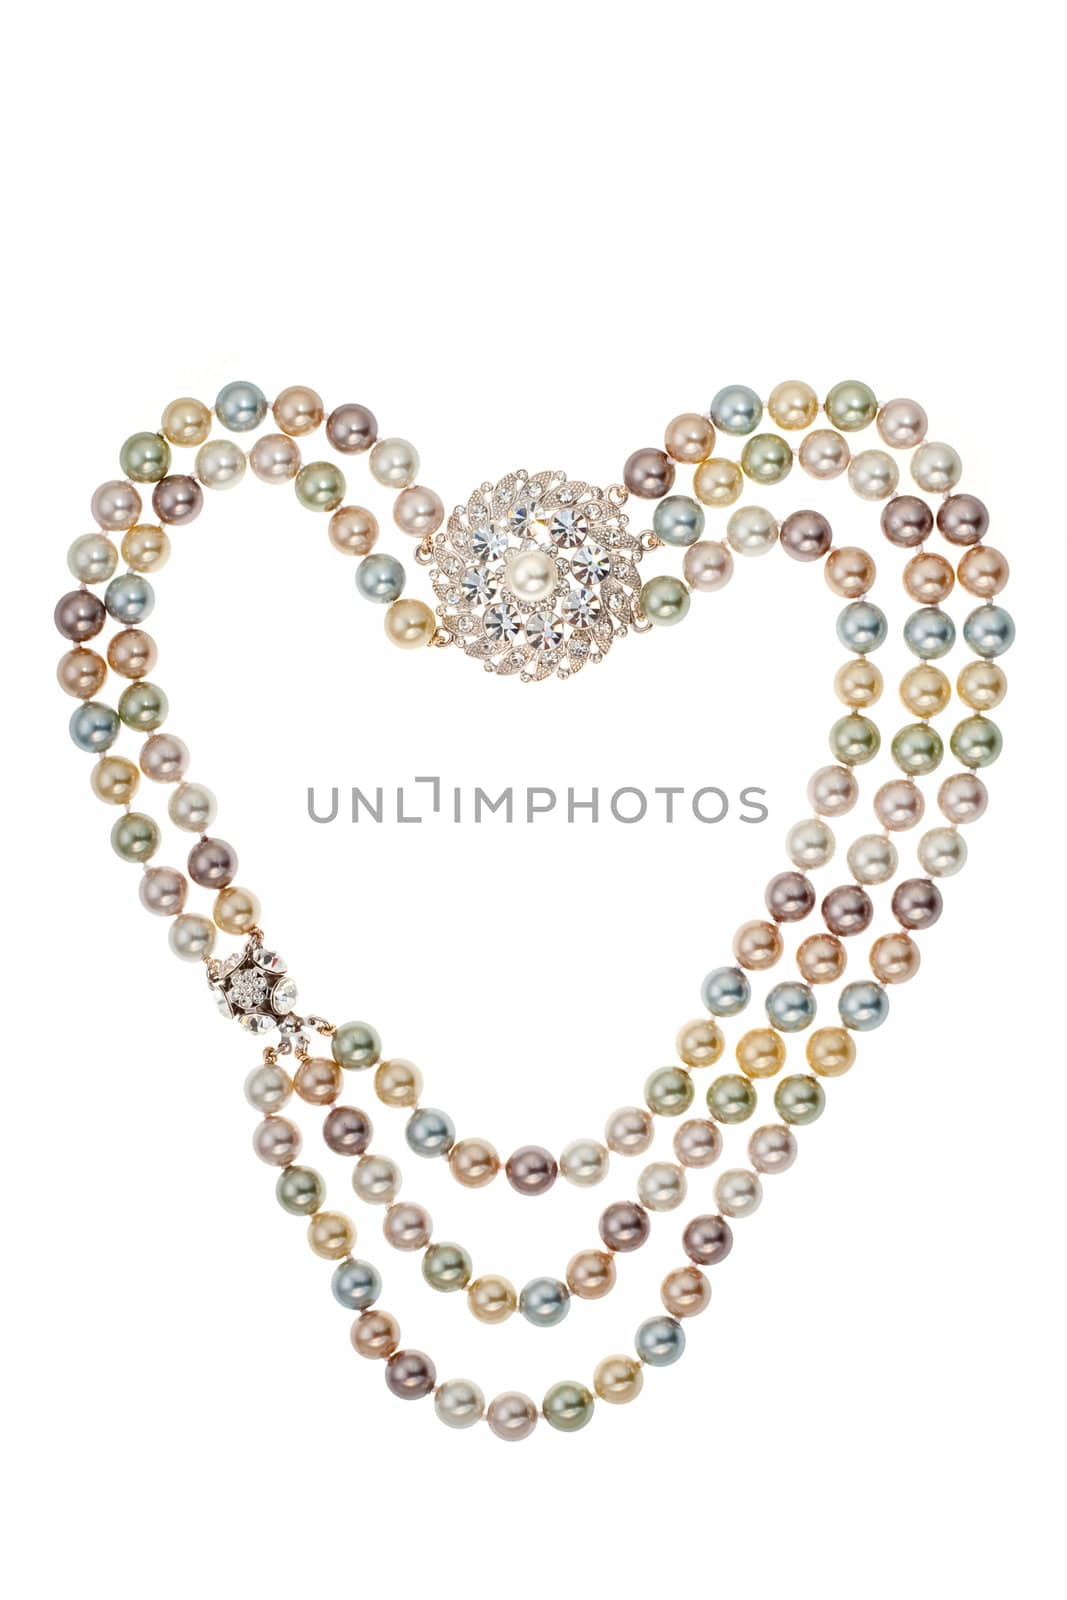 Frame of necklace heart shape by igor_stramyk